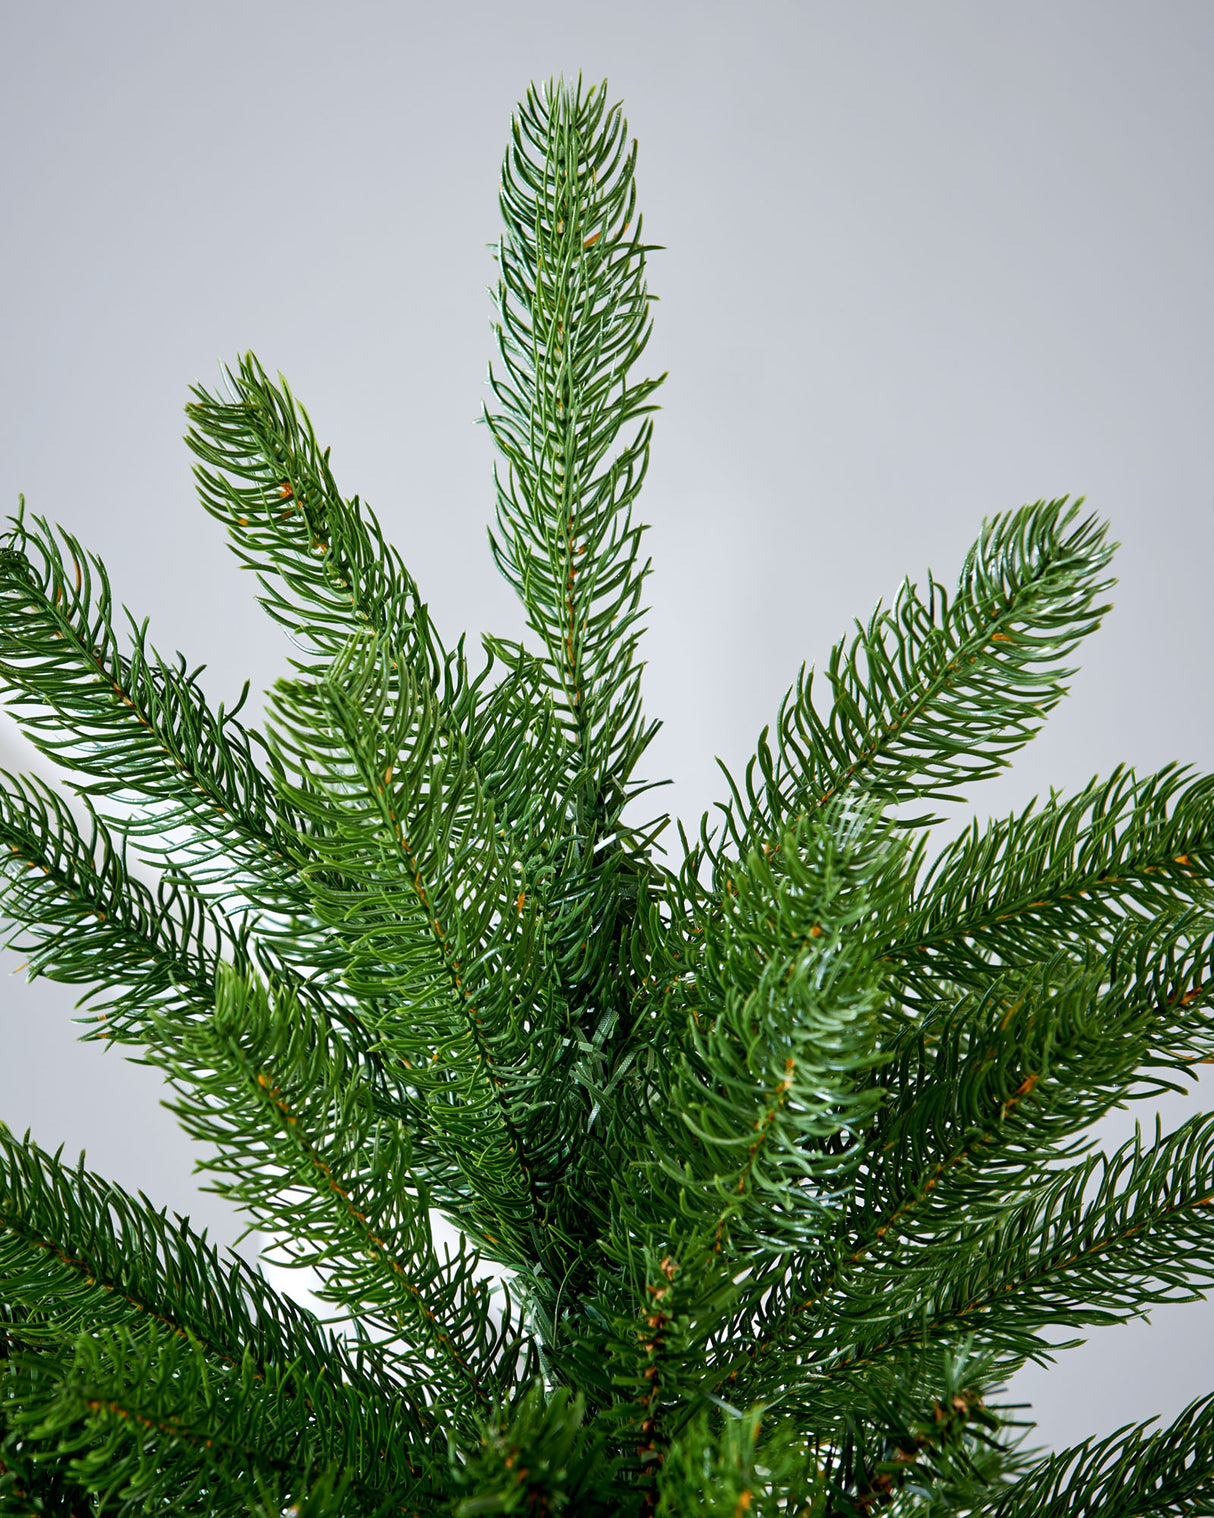 Large Mixed Pine 8ft Christmas Tree